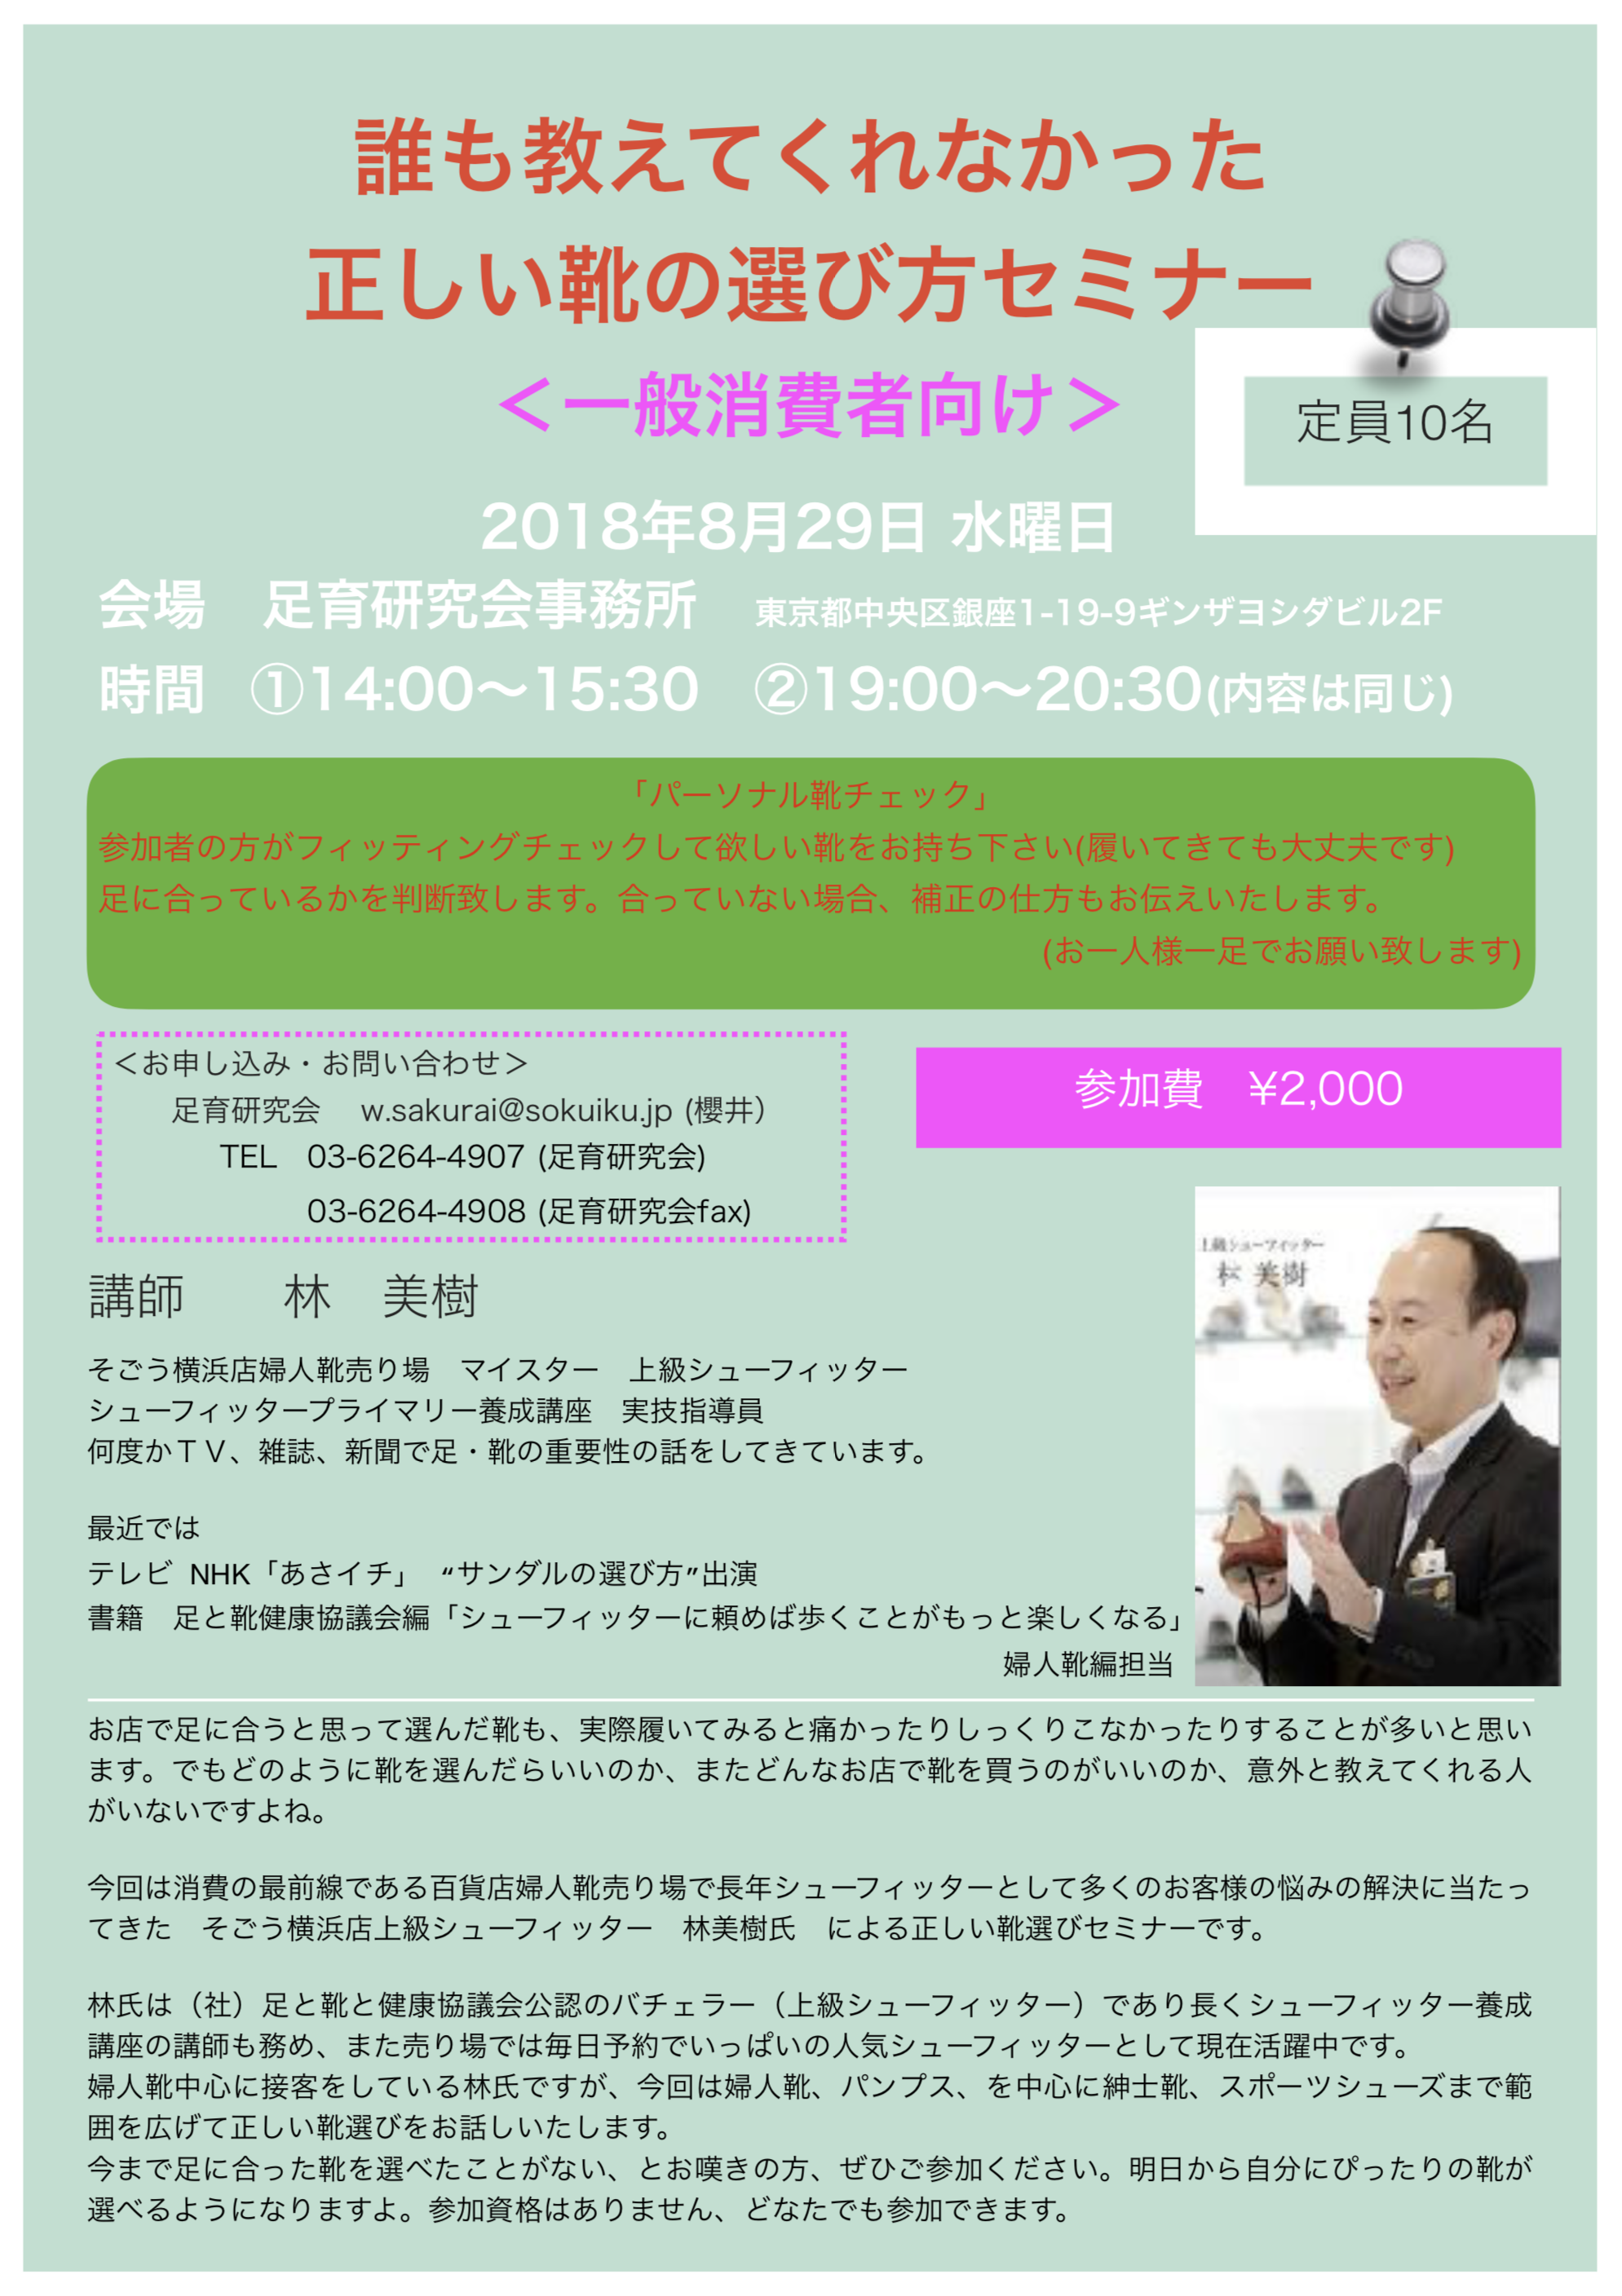 http://www.sokuiku.jp/photo/event_20180829_b.png